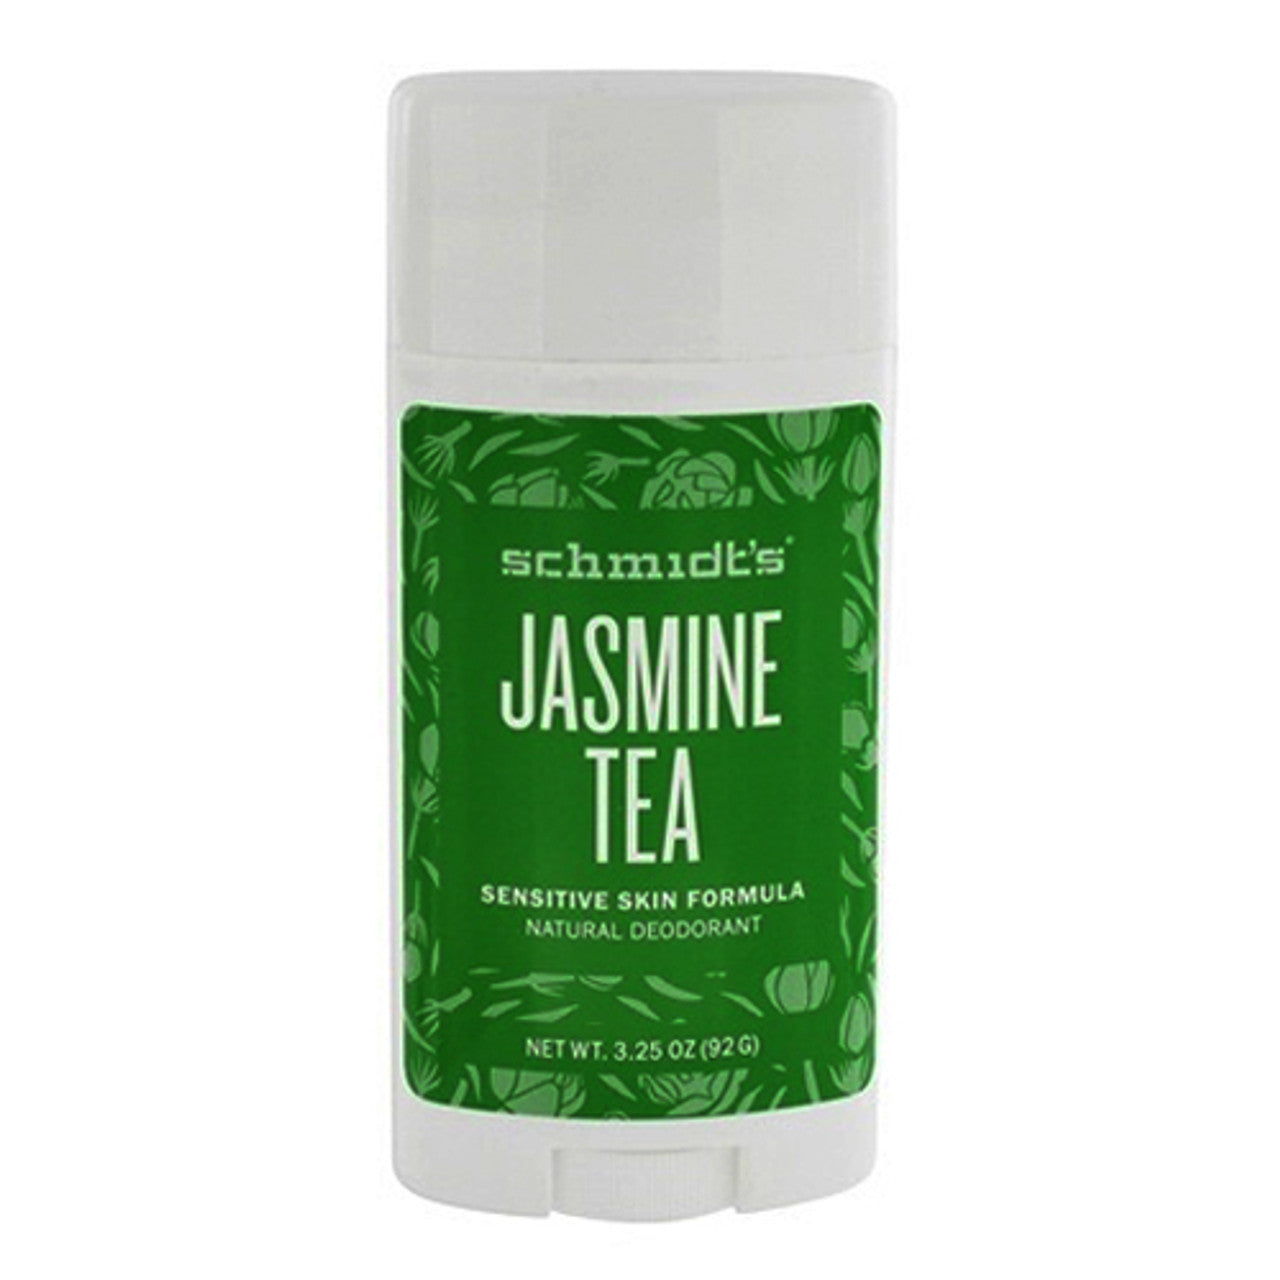 Schmidts Jasmine Tea Sensitive Skin Formula Natural Deodorant Stick, 3.25 Oz